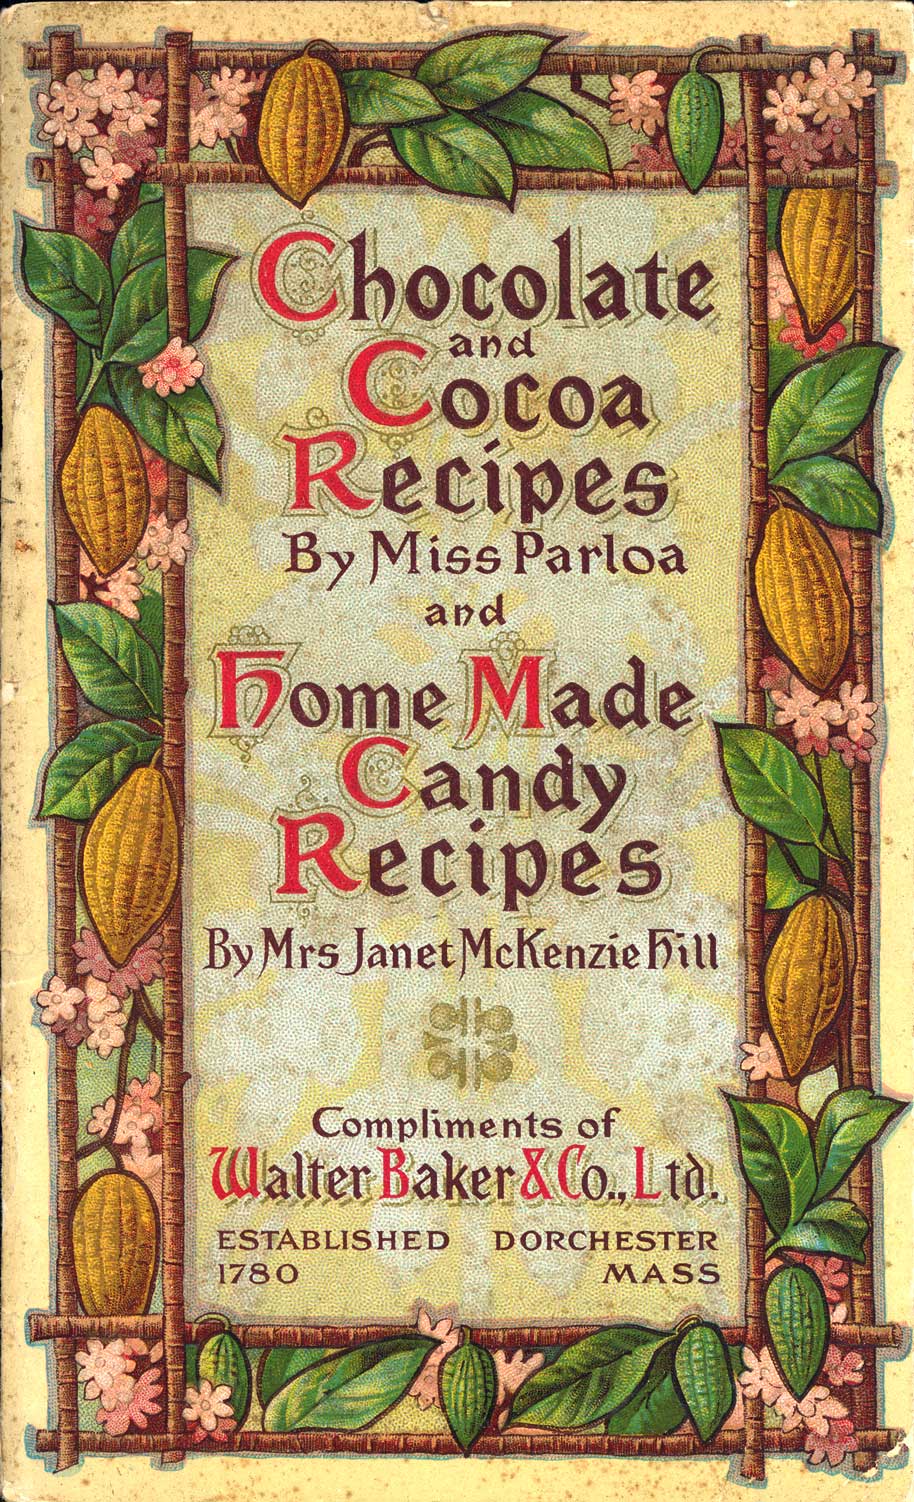 Chocolate and cocoa recipes